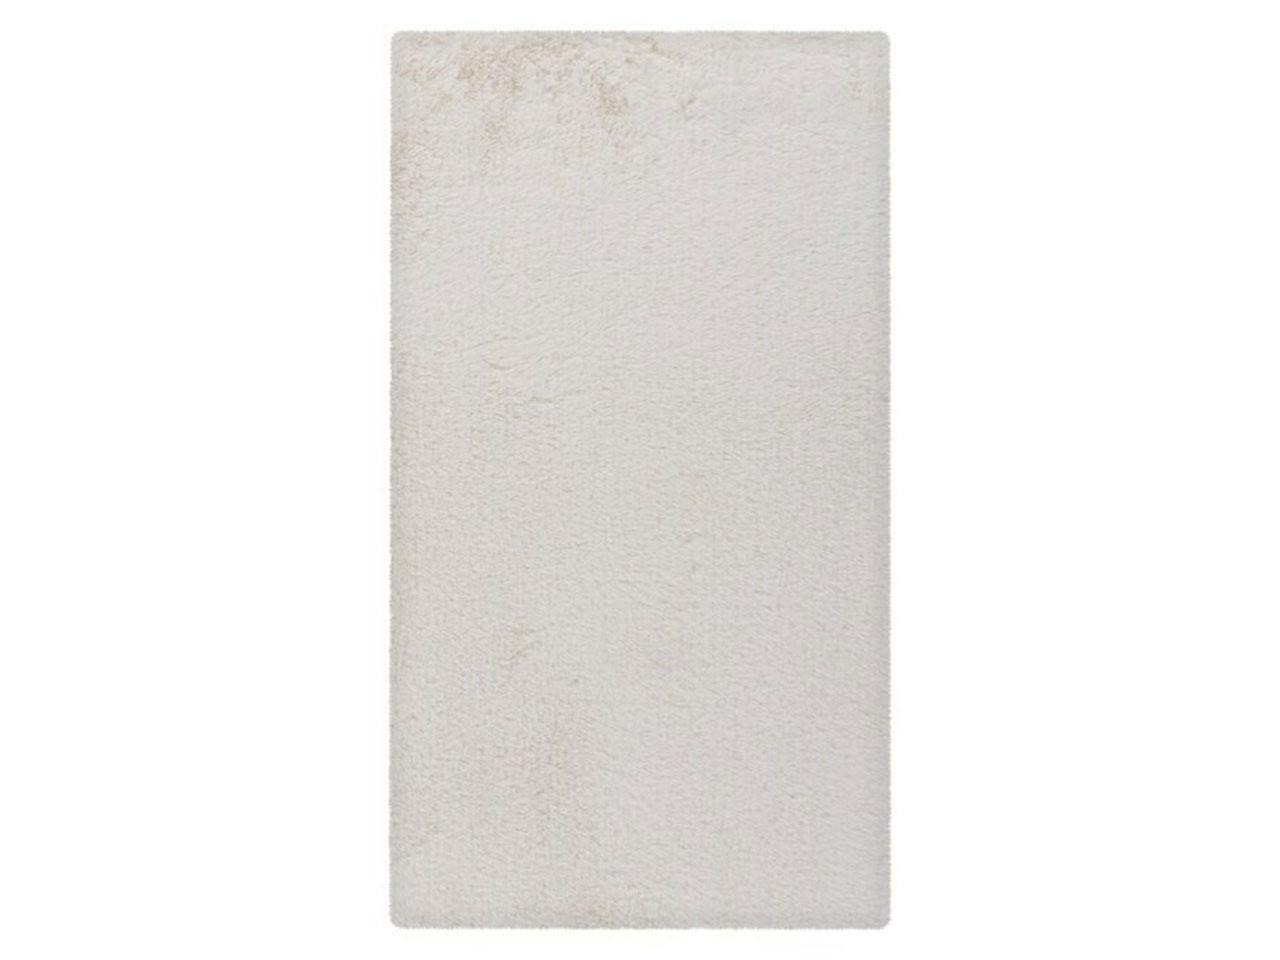 Koberec do koupelny LALEE Happy, 50 x 90 cm, bílý